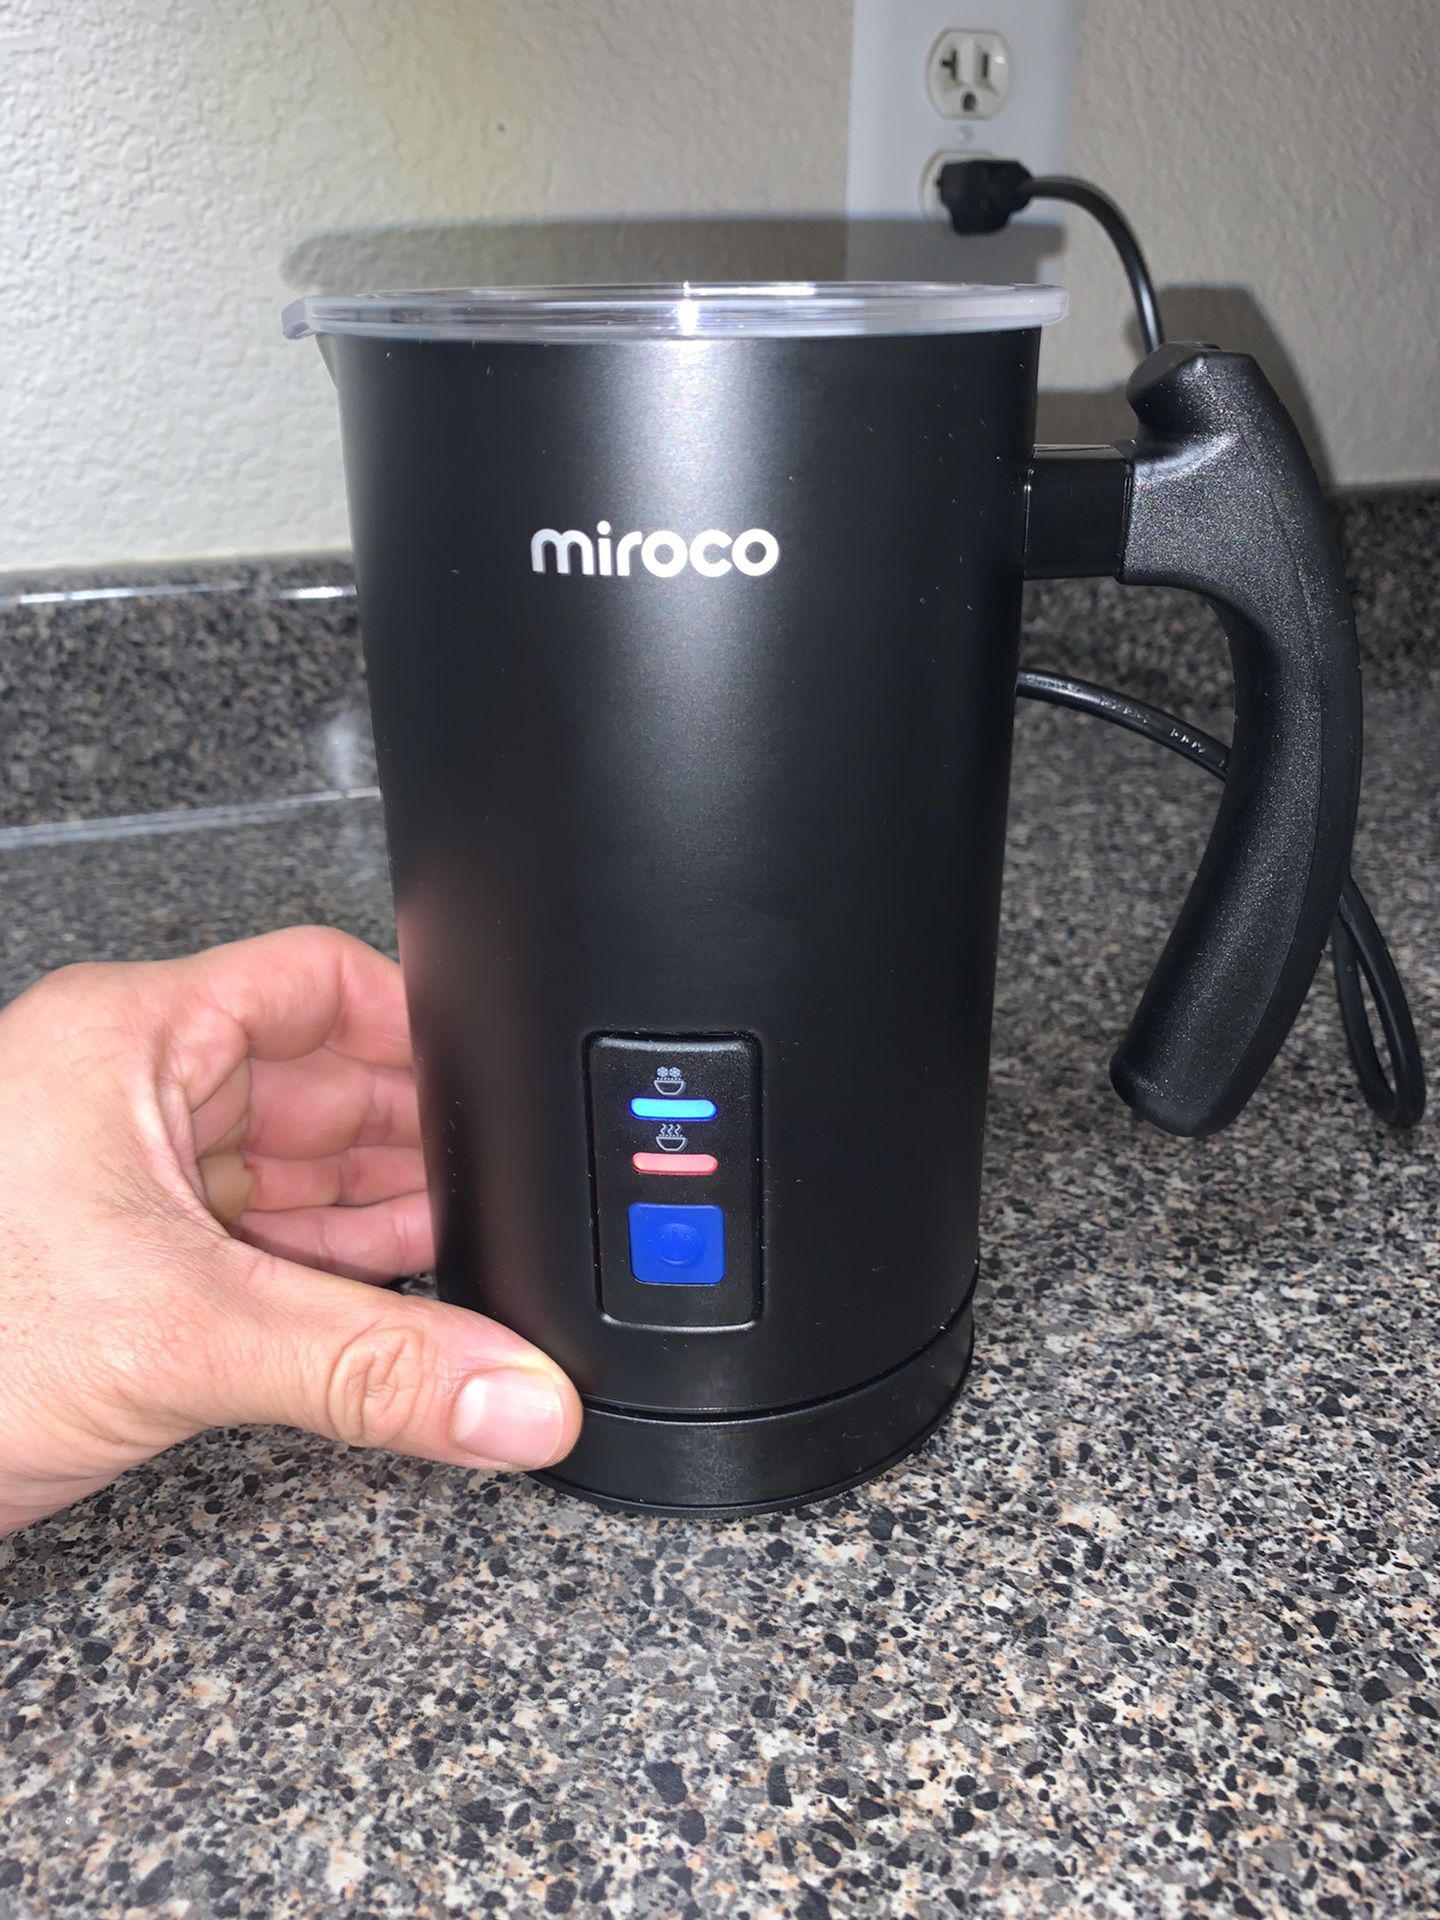 Miroco Milk Frother, Electric Milk Steamer Black Stainless Steel